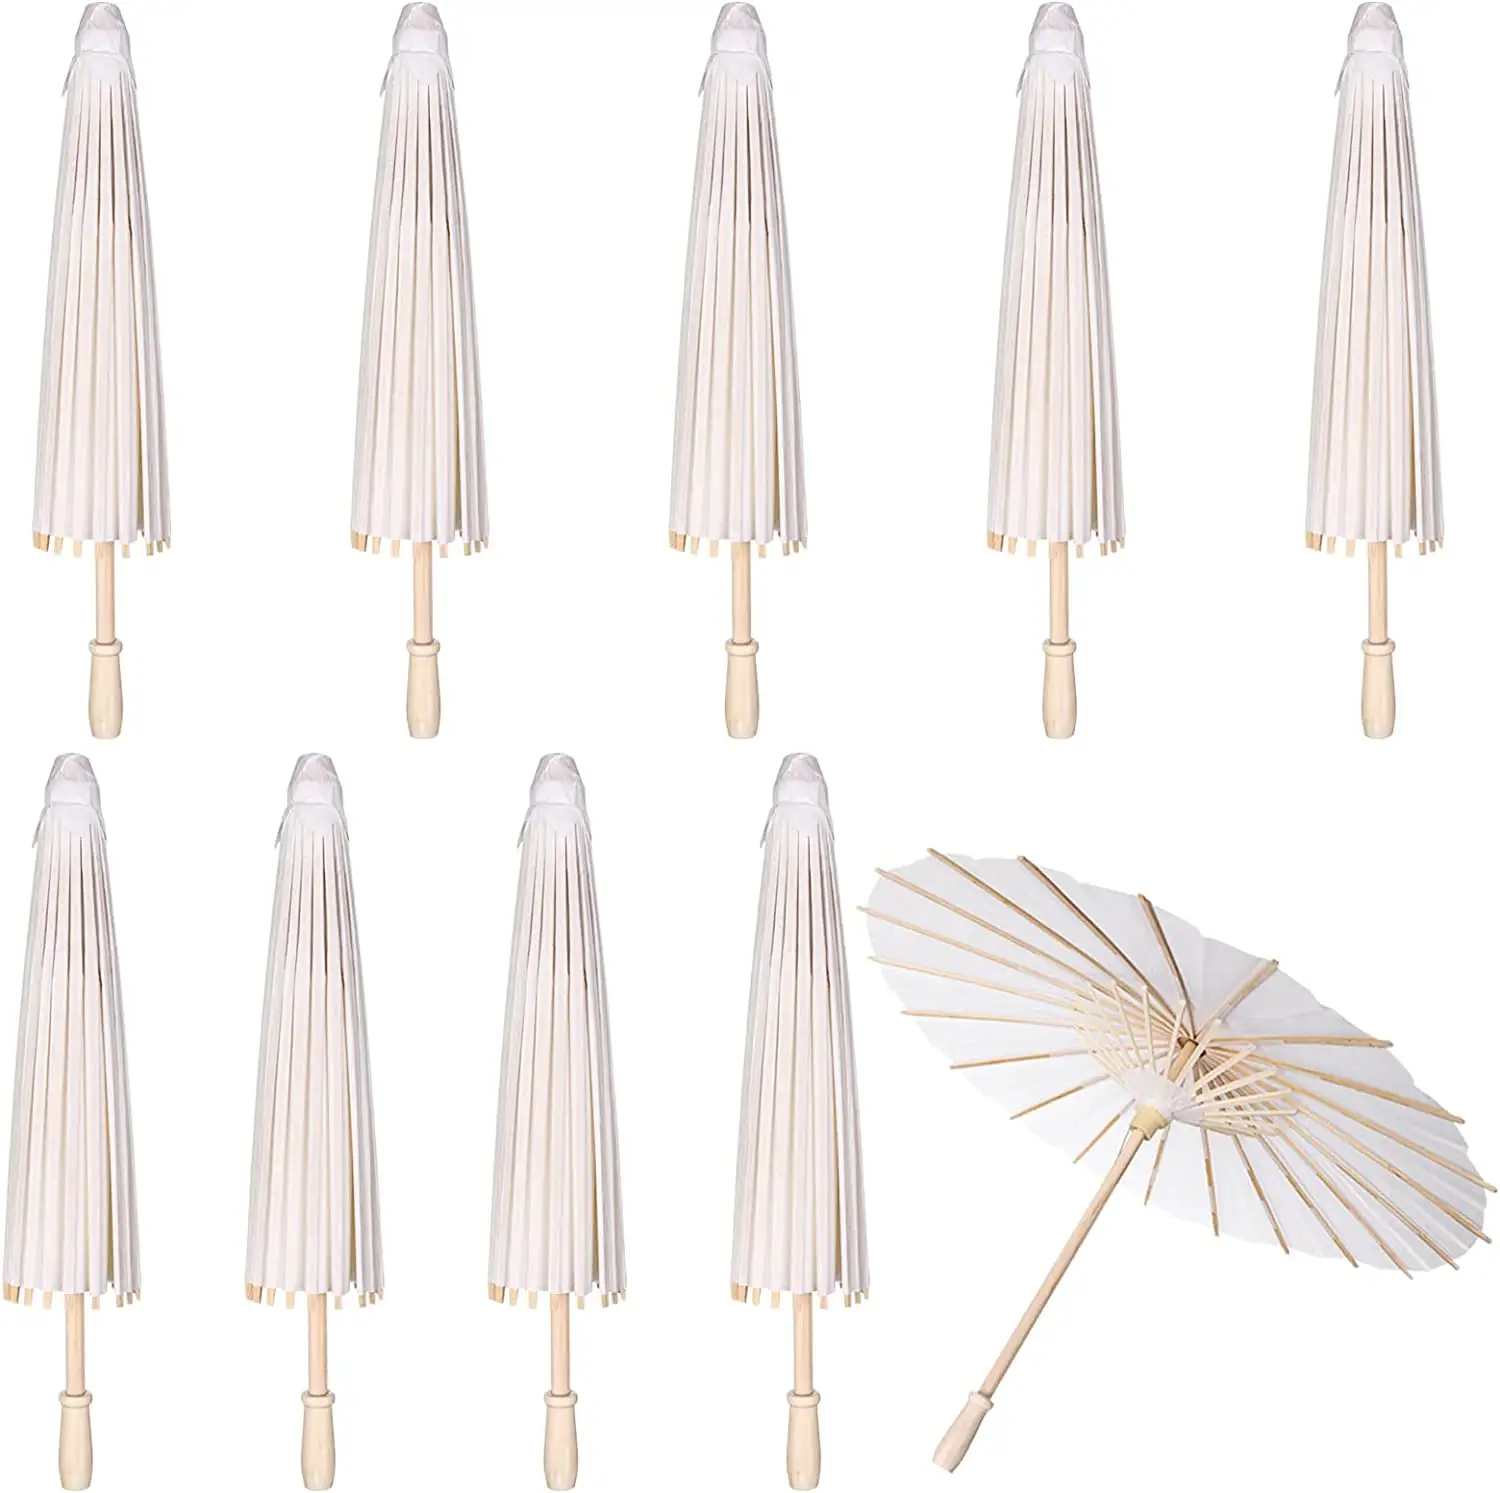 Paper Umbrella Decor Classic White Color DIY Paper Umbrella Parasol Small White Parasol Paper Umbrellas for Crafts Decorations